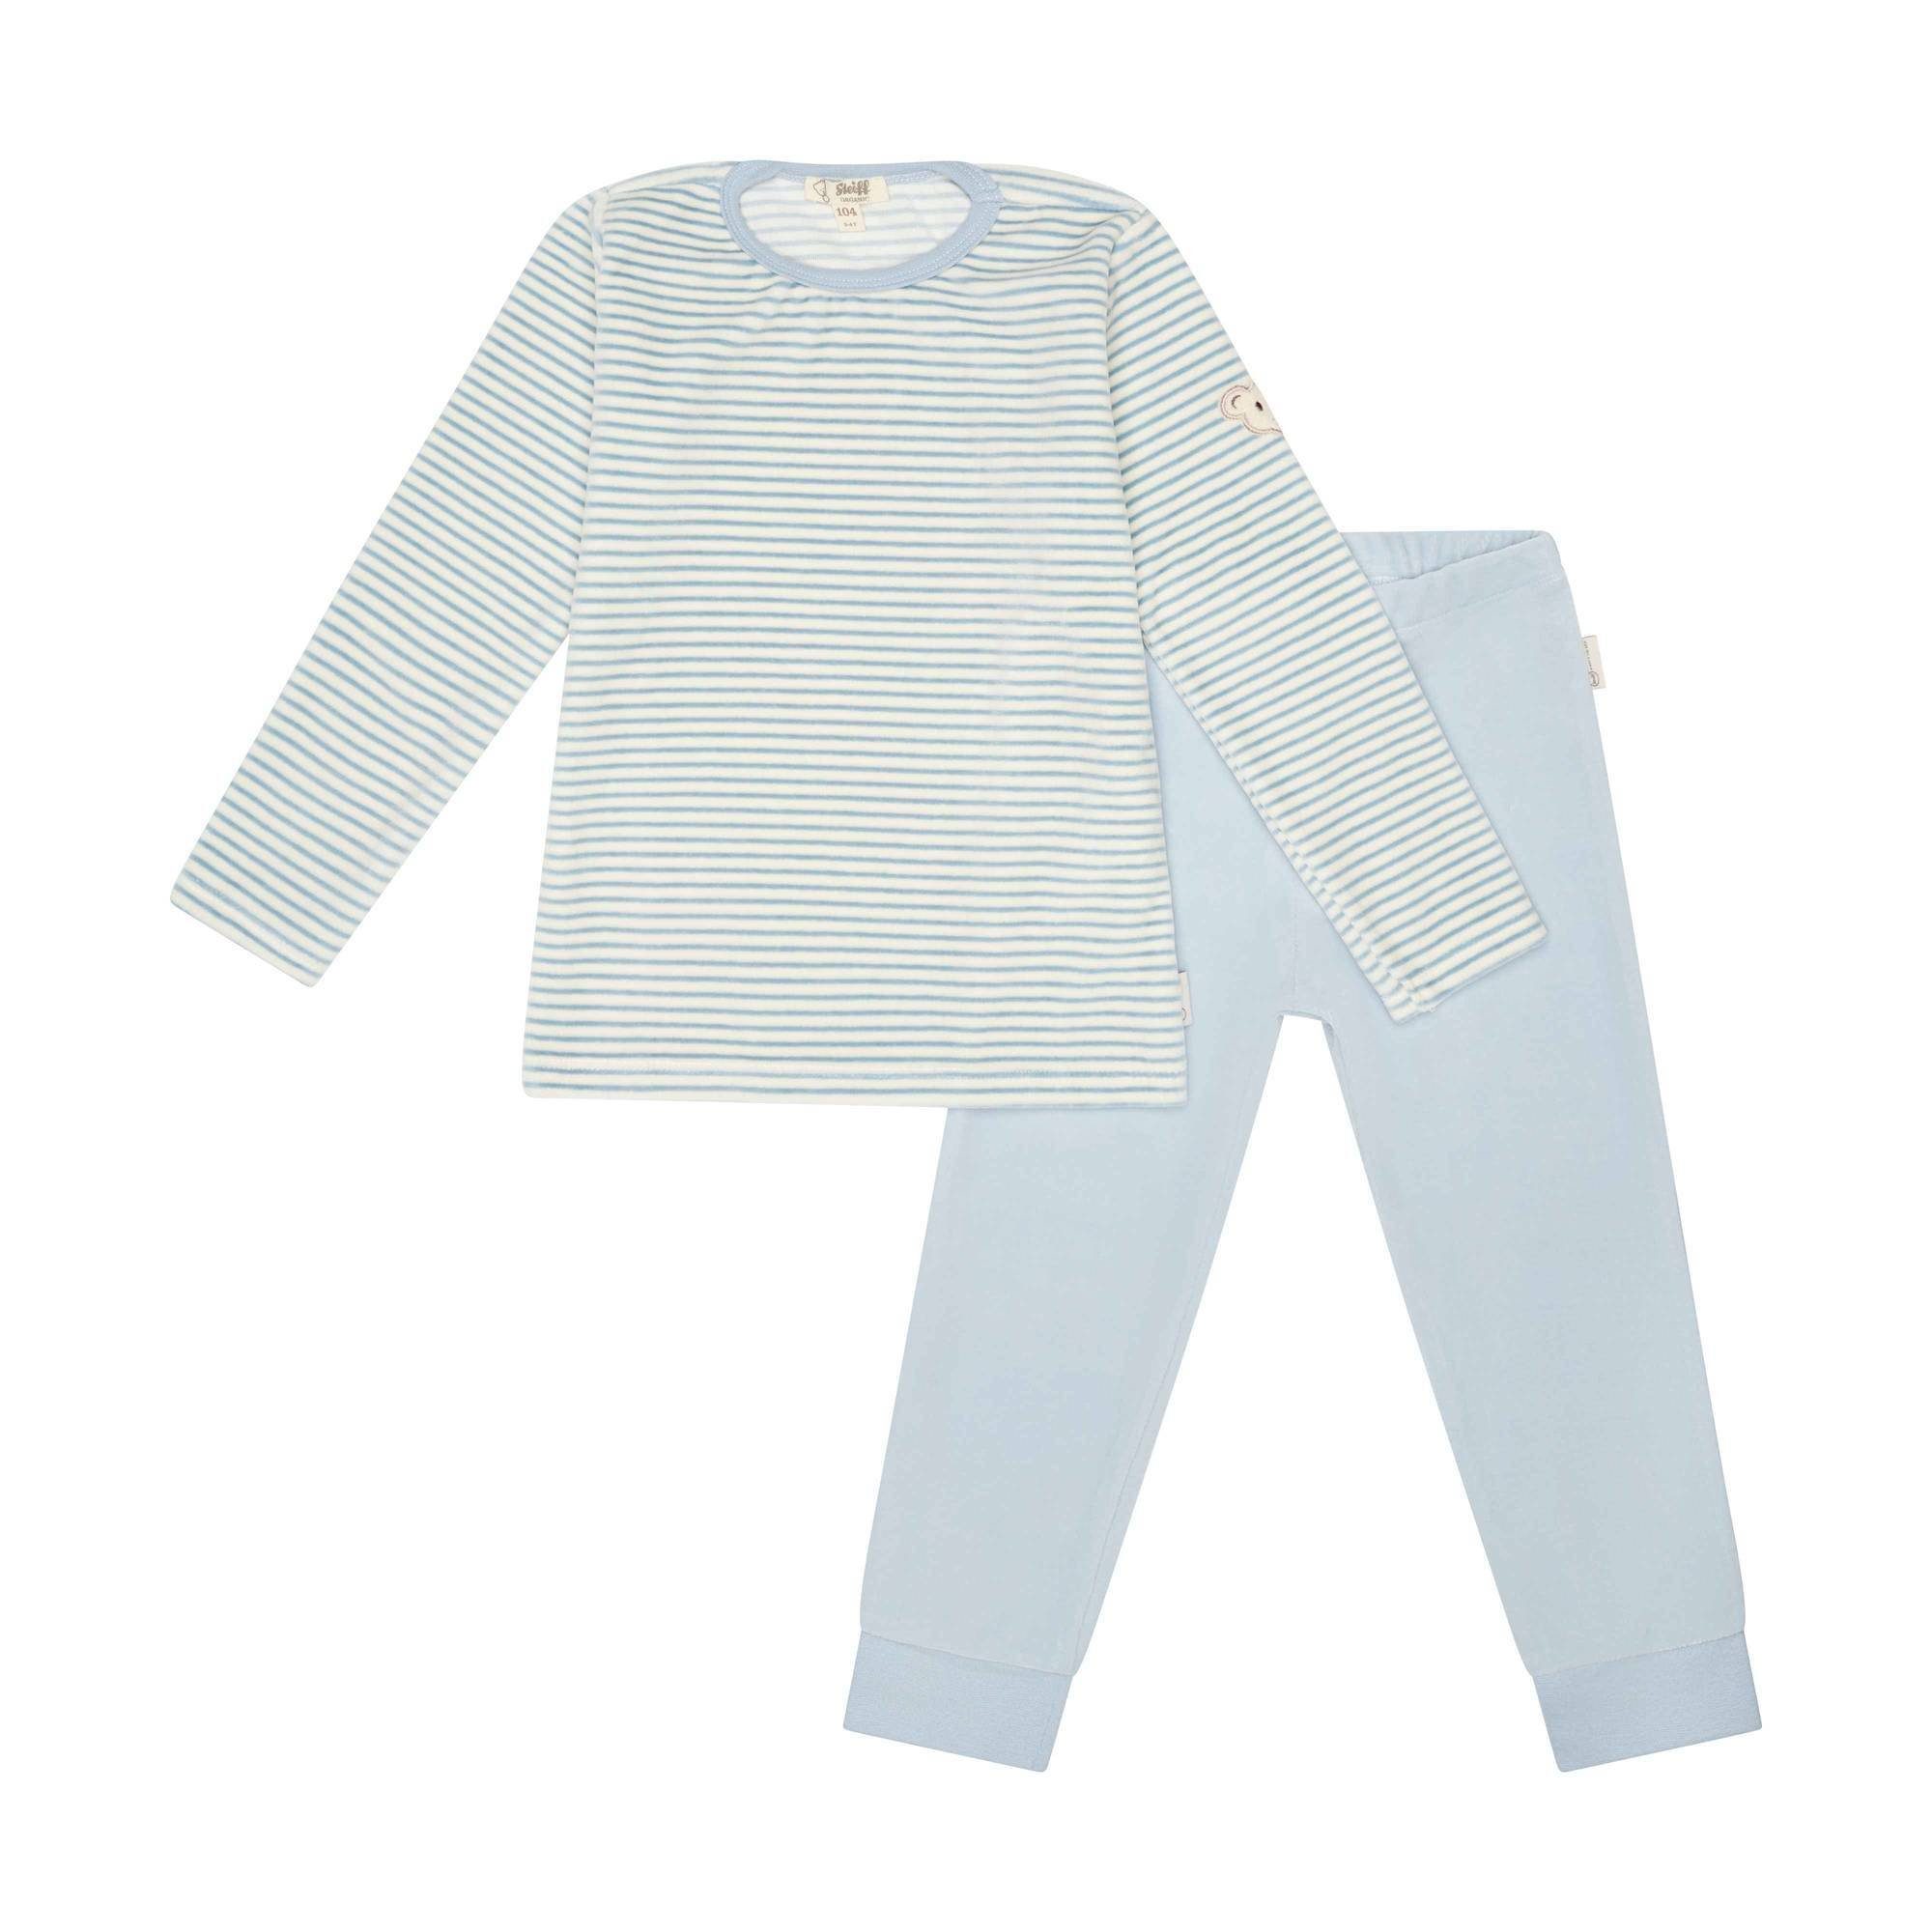 Steiff Pyjama Kinder Schlafanzug Set - Nachtwäsche, Pyjama Hellblau/Weiß